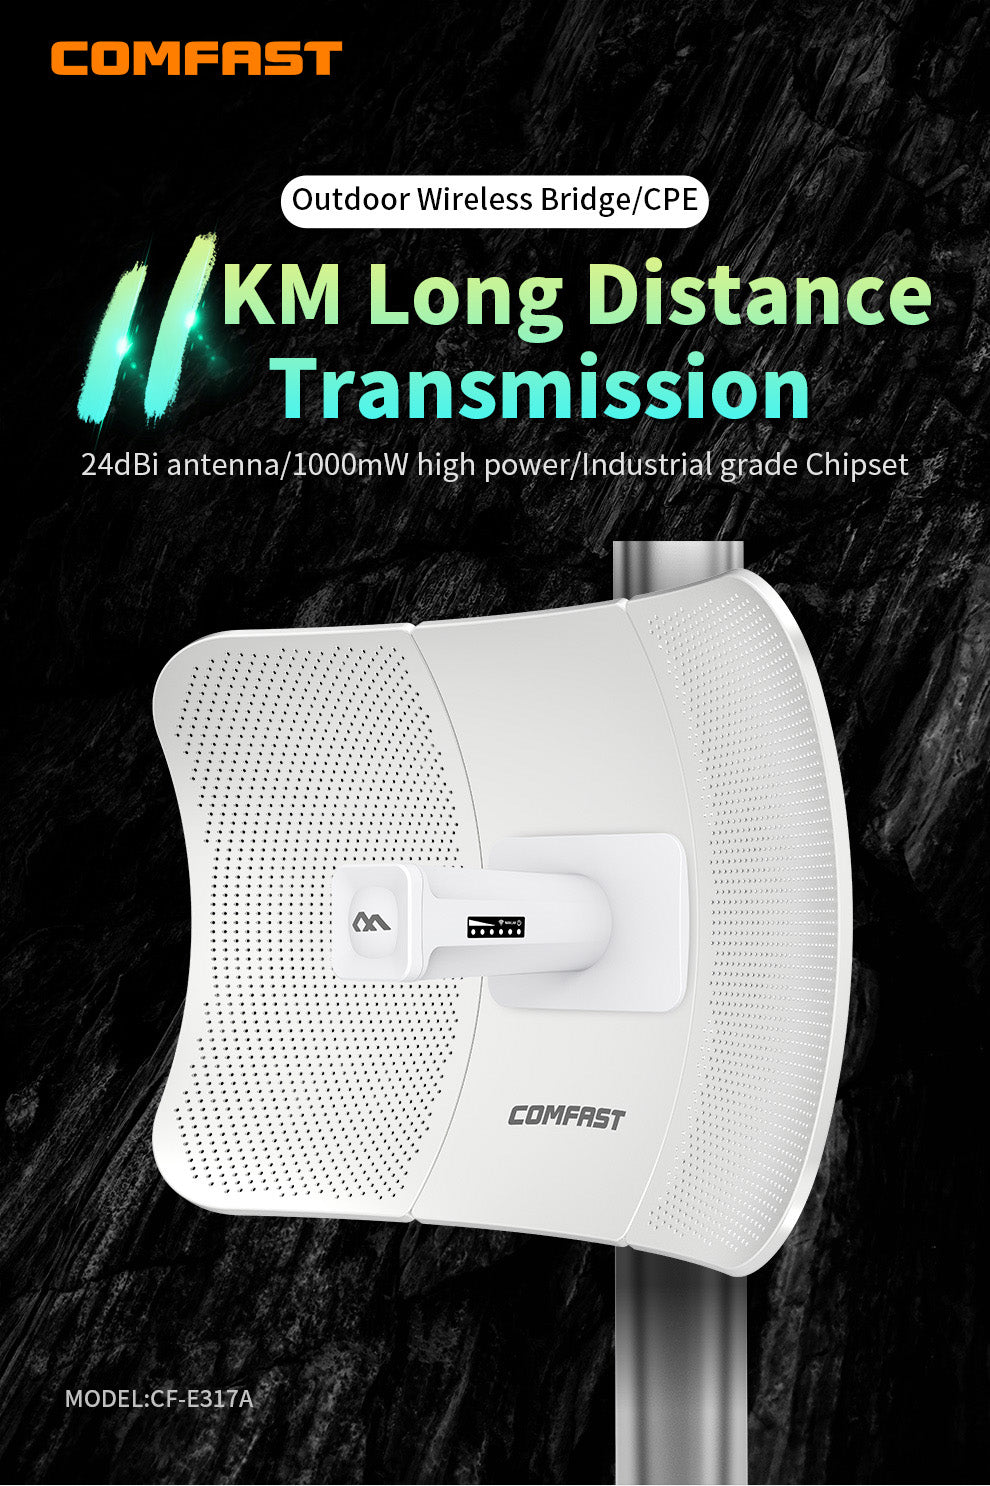 CF-E317A Long Distance Transmission Outdoor Wireless Bridge CPE